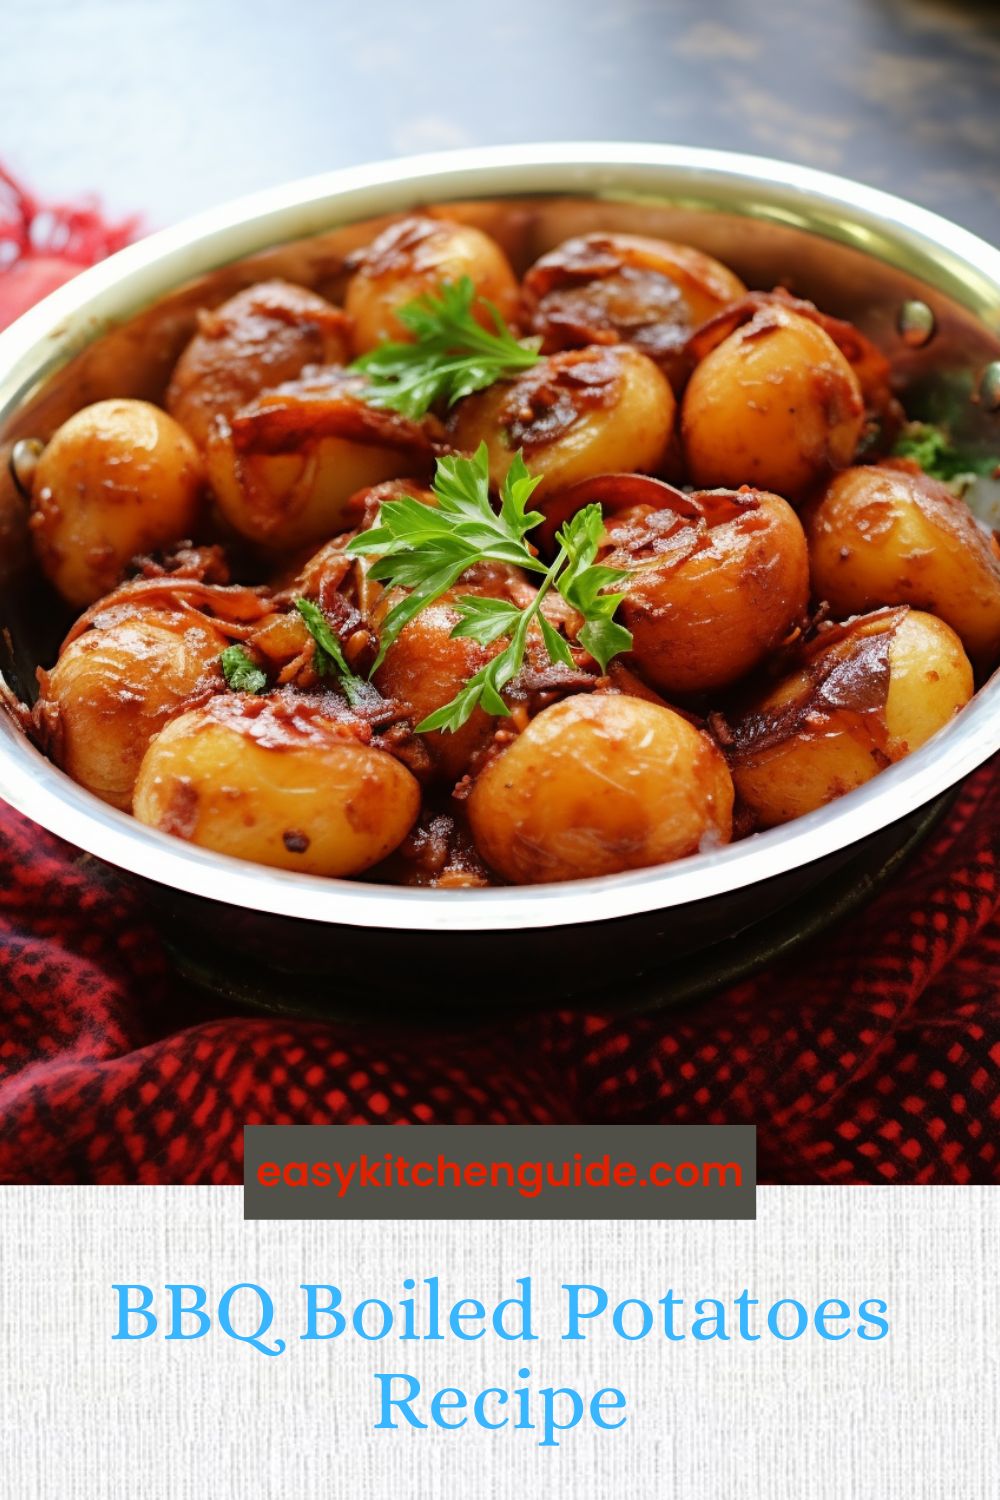 BBQ Boiled Potatoes Recipe